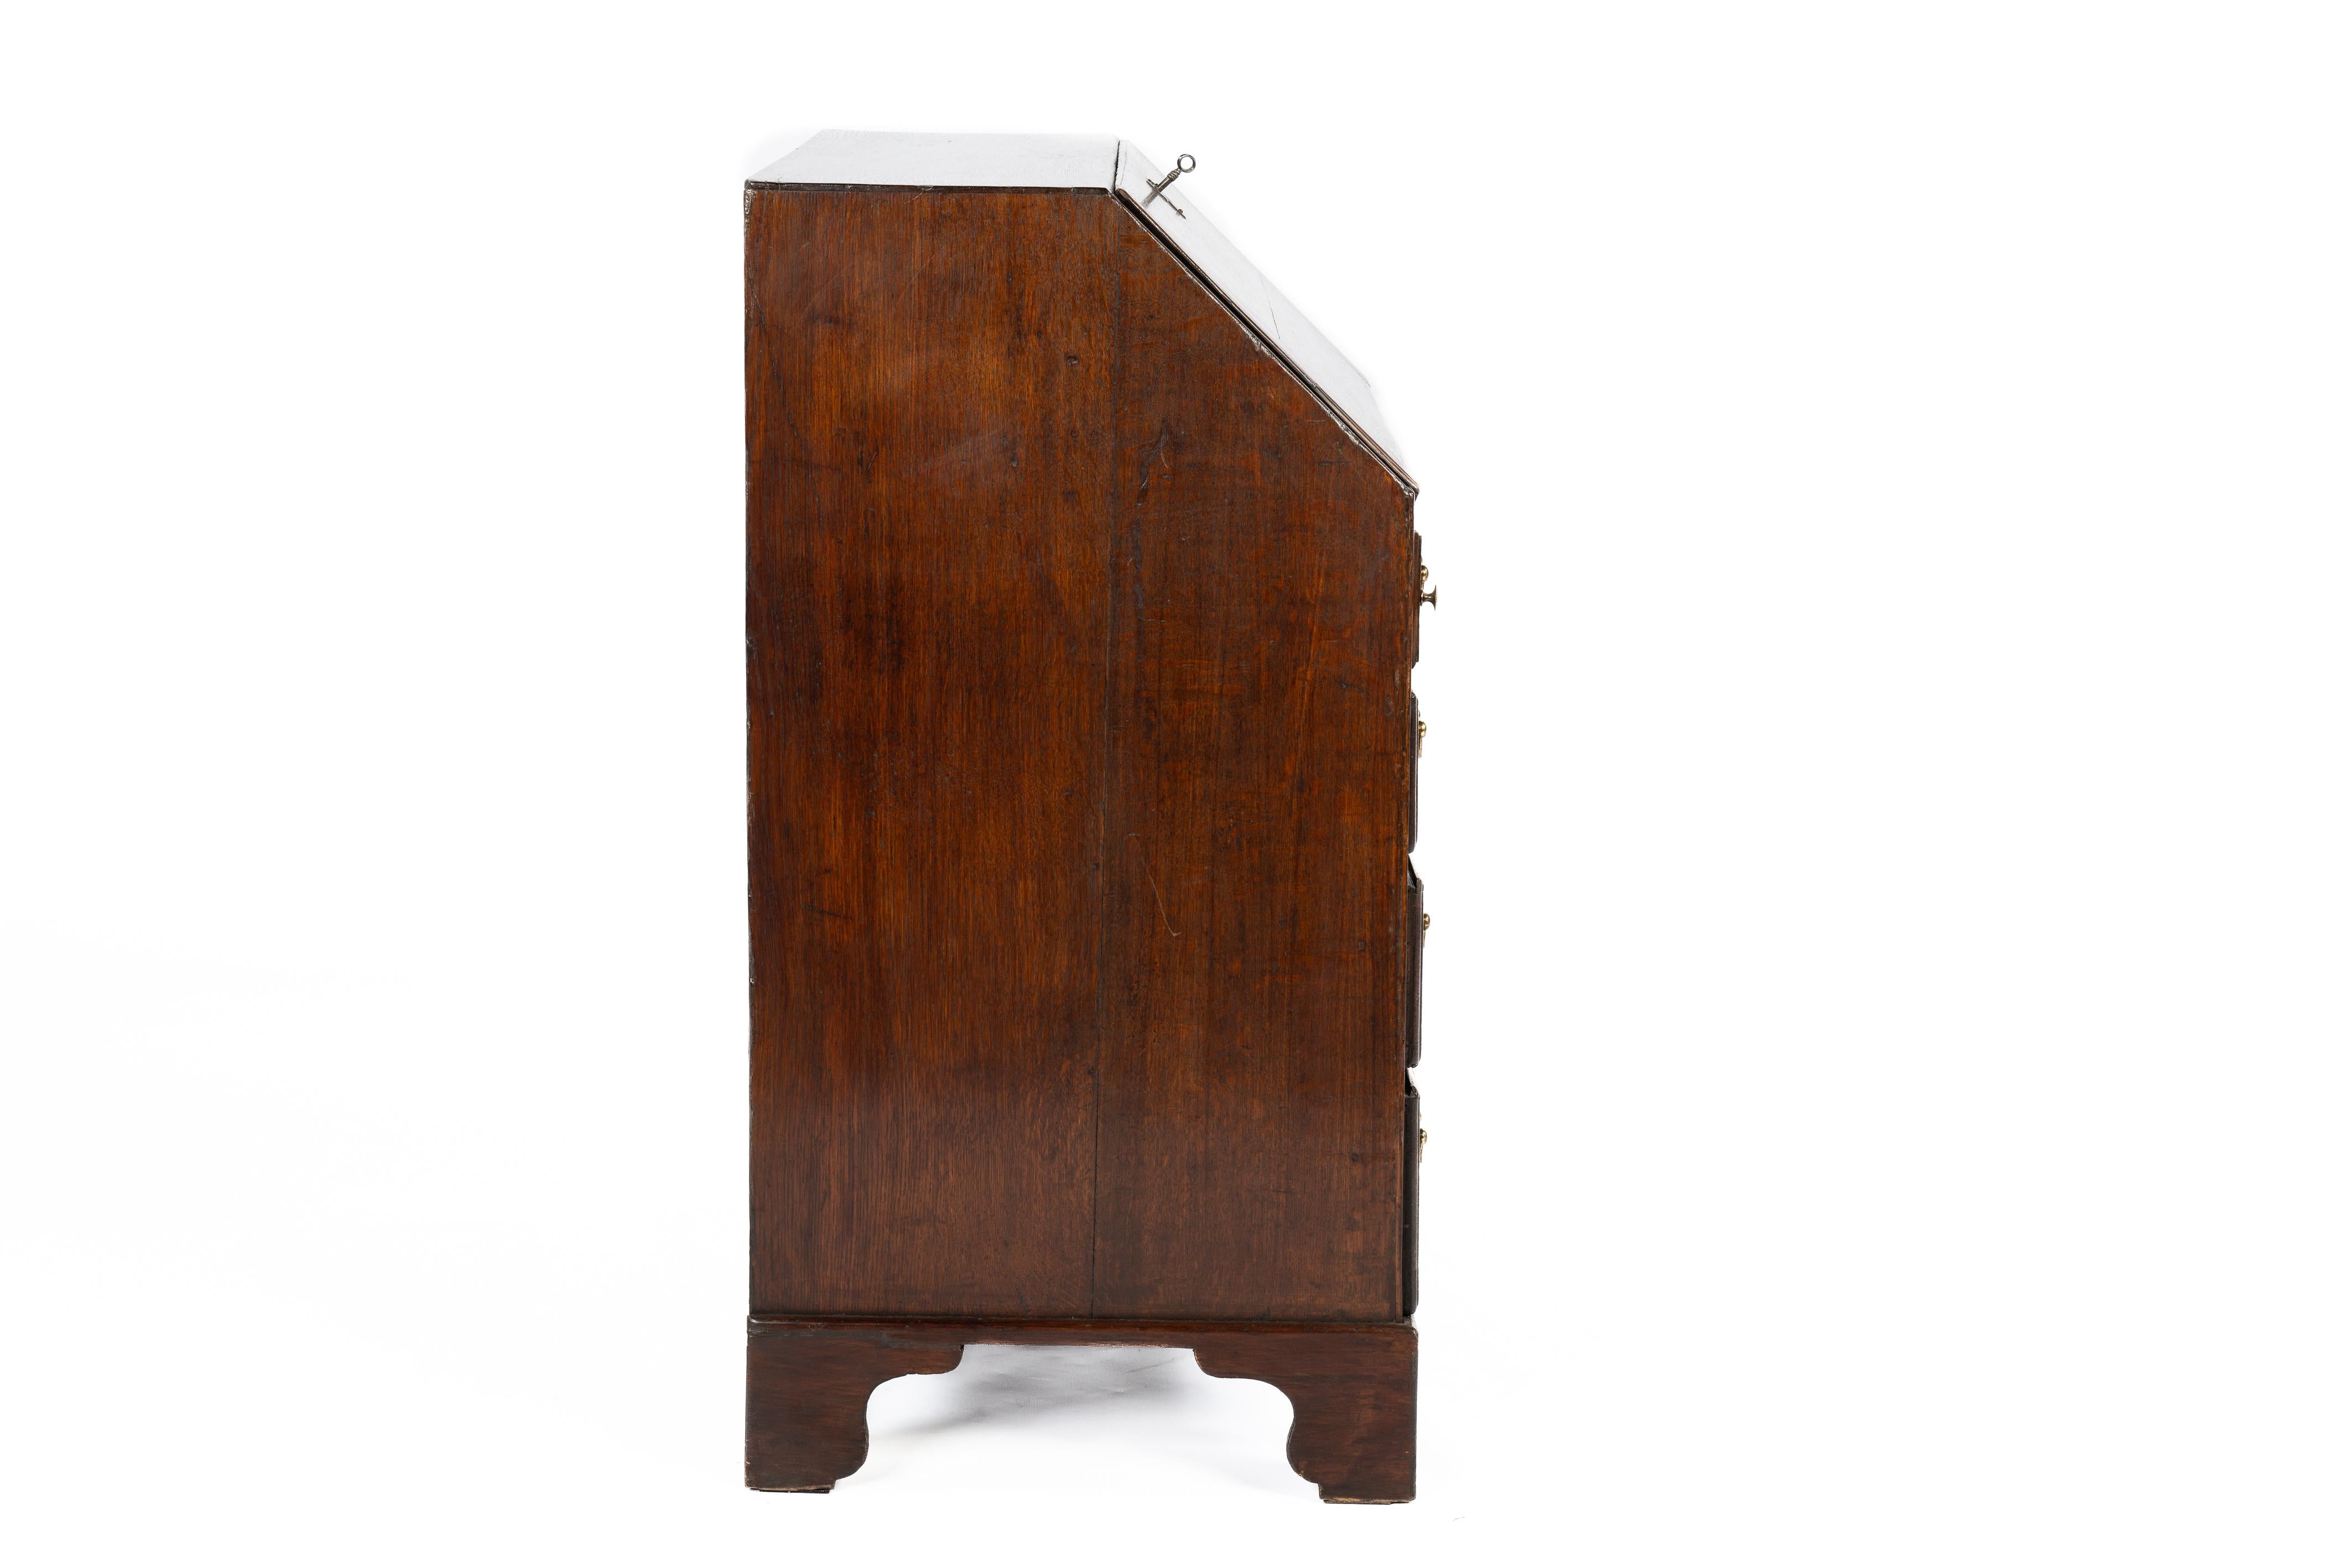 Antique 18th century warm brown English Oak Queen Anne Slant-Front Desk In Good Condition For Sale In Casteren, NL